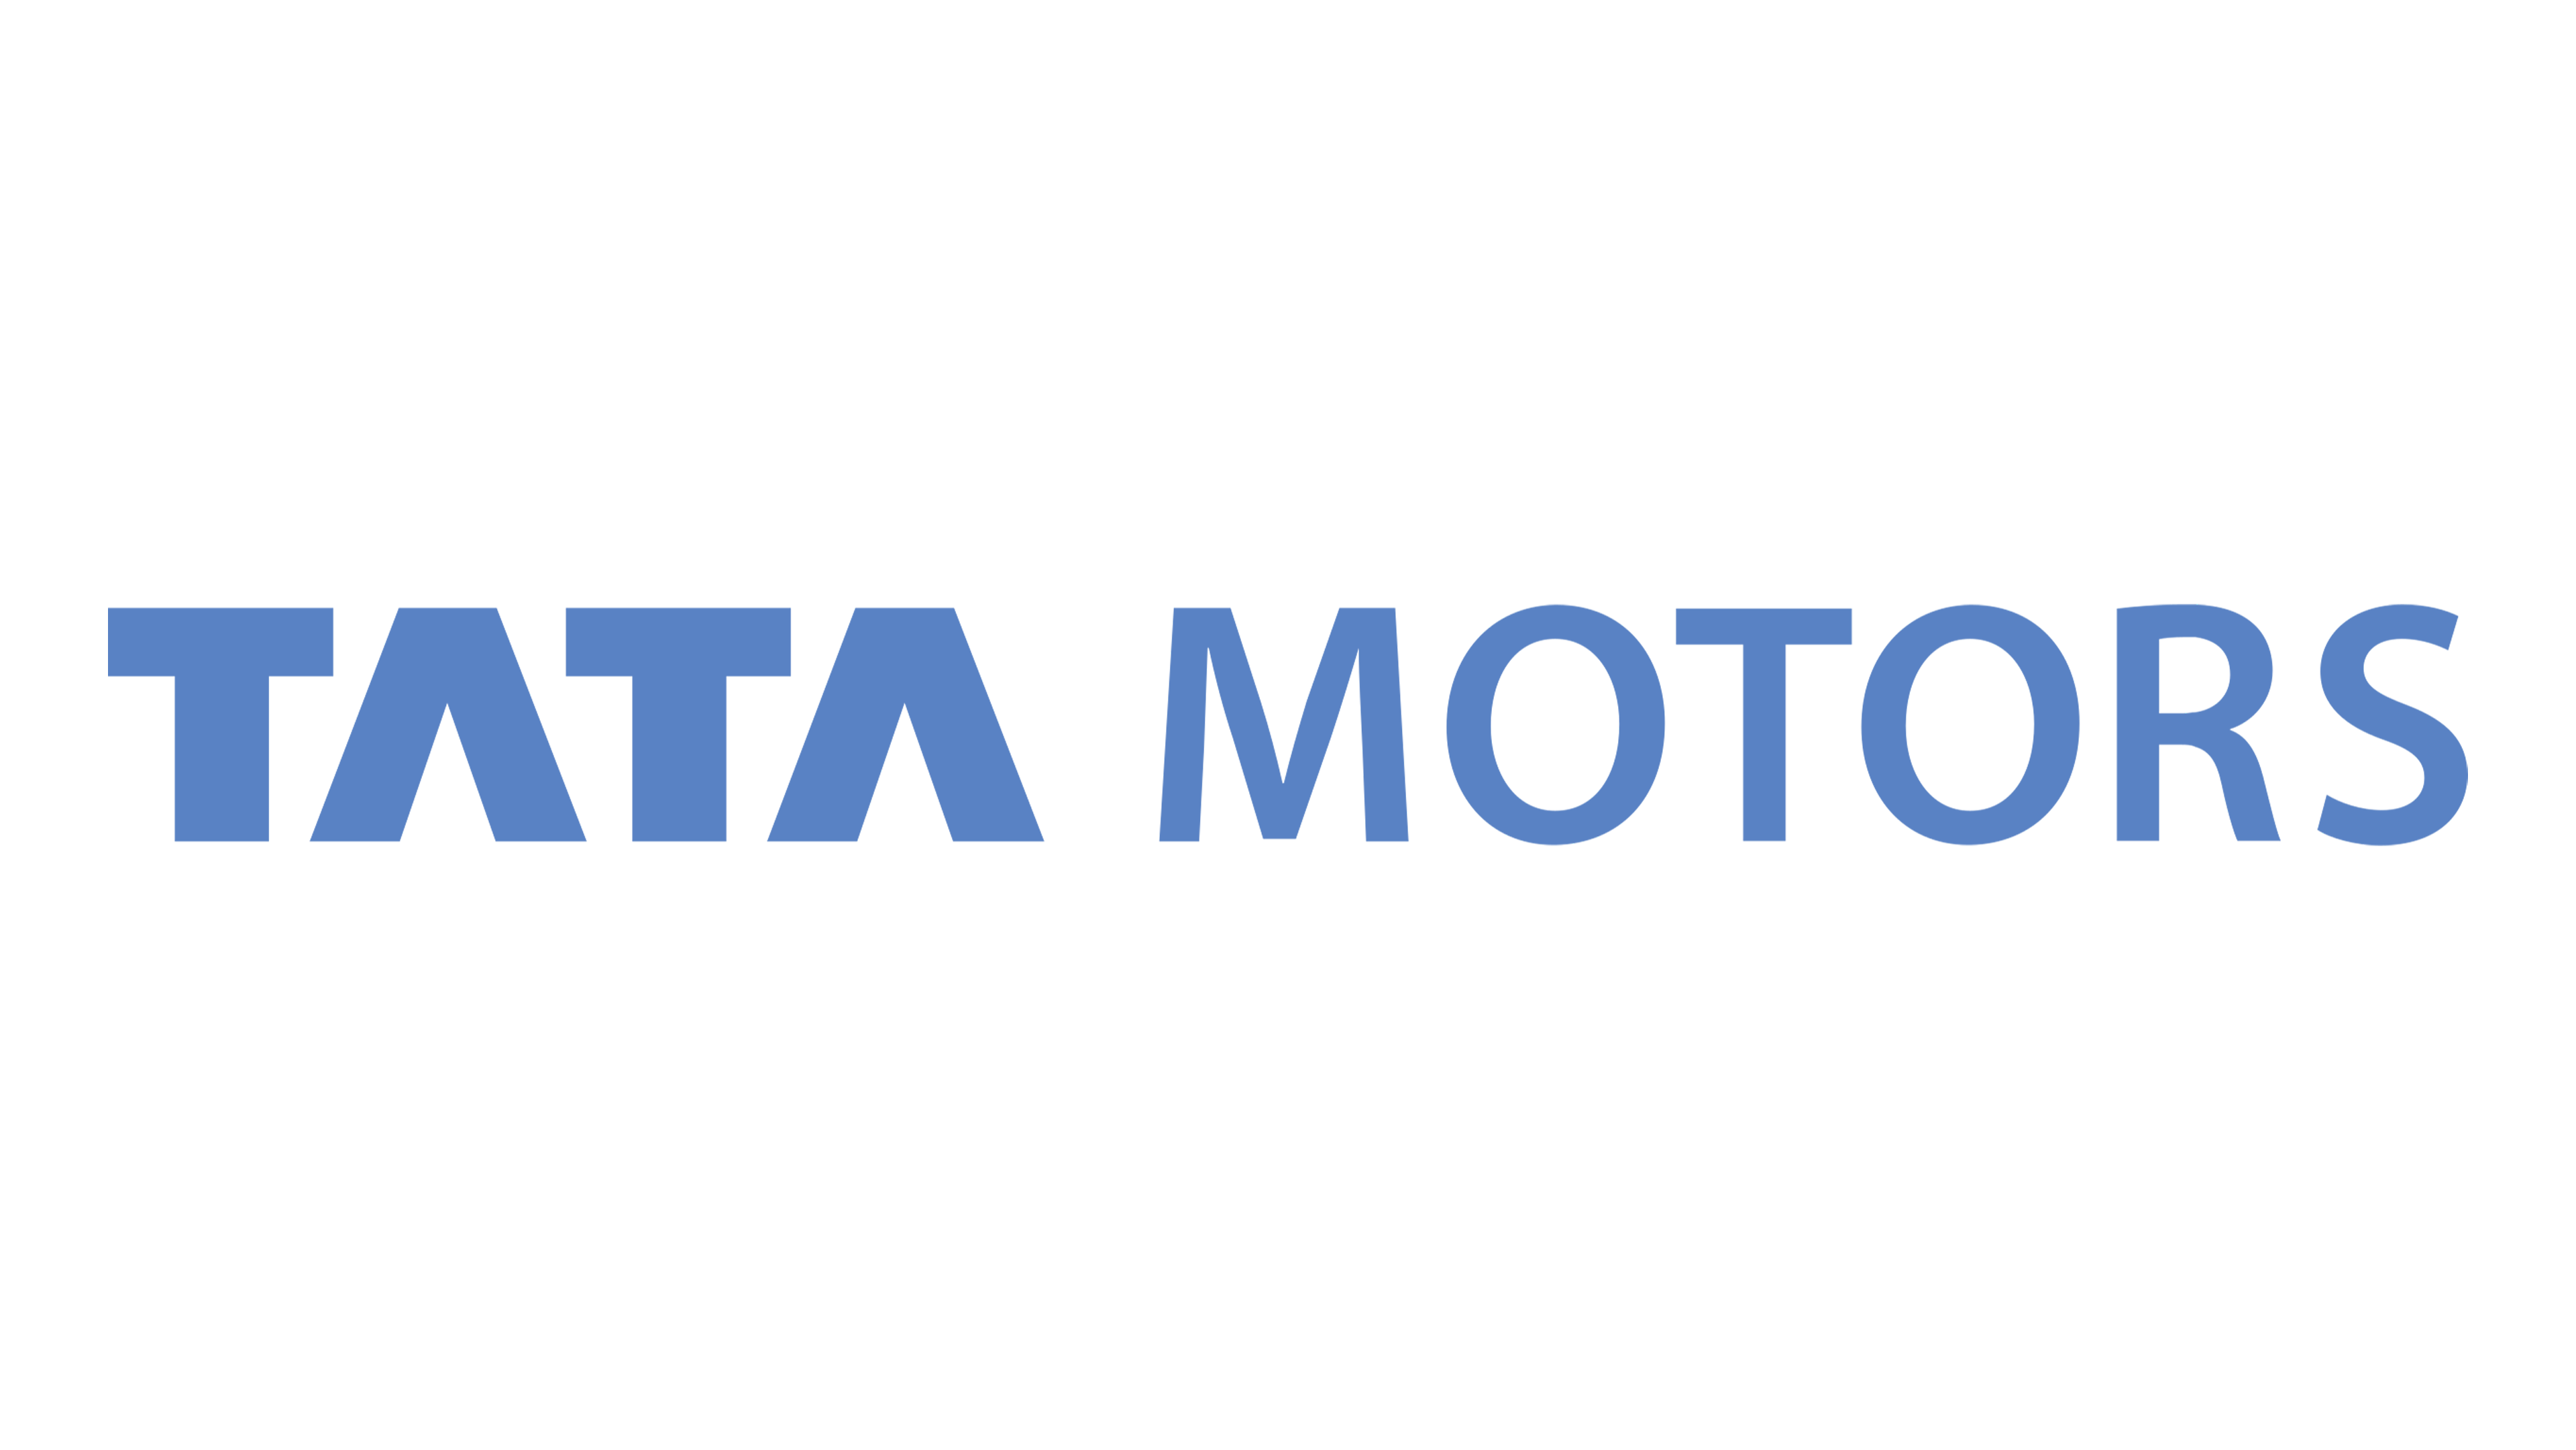 Tata Motors Logo Meaning and History [Tata Motors symbol]